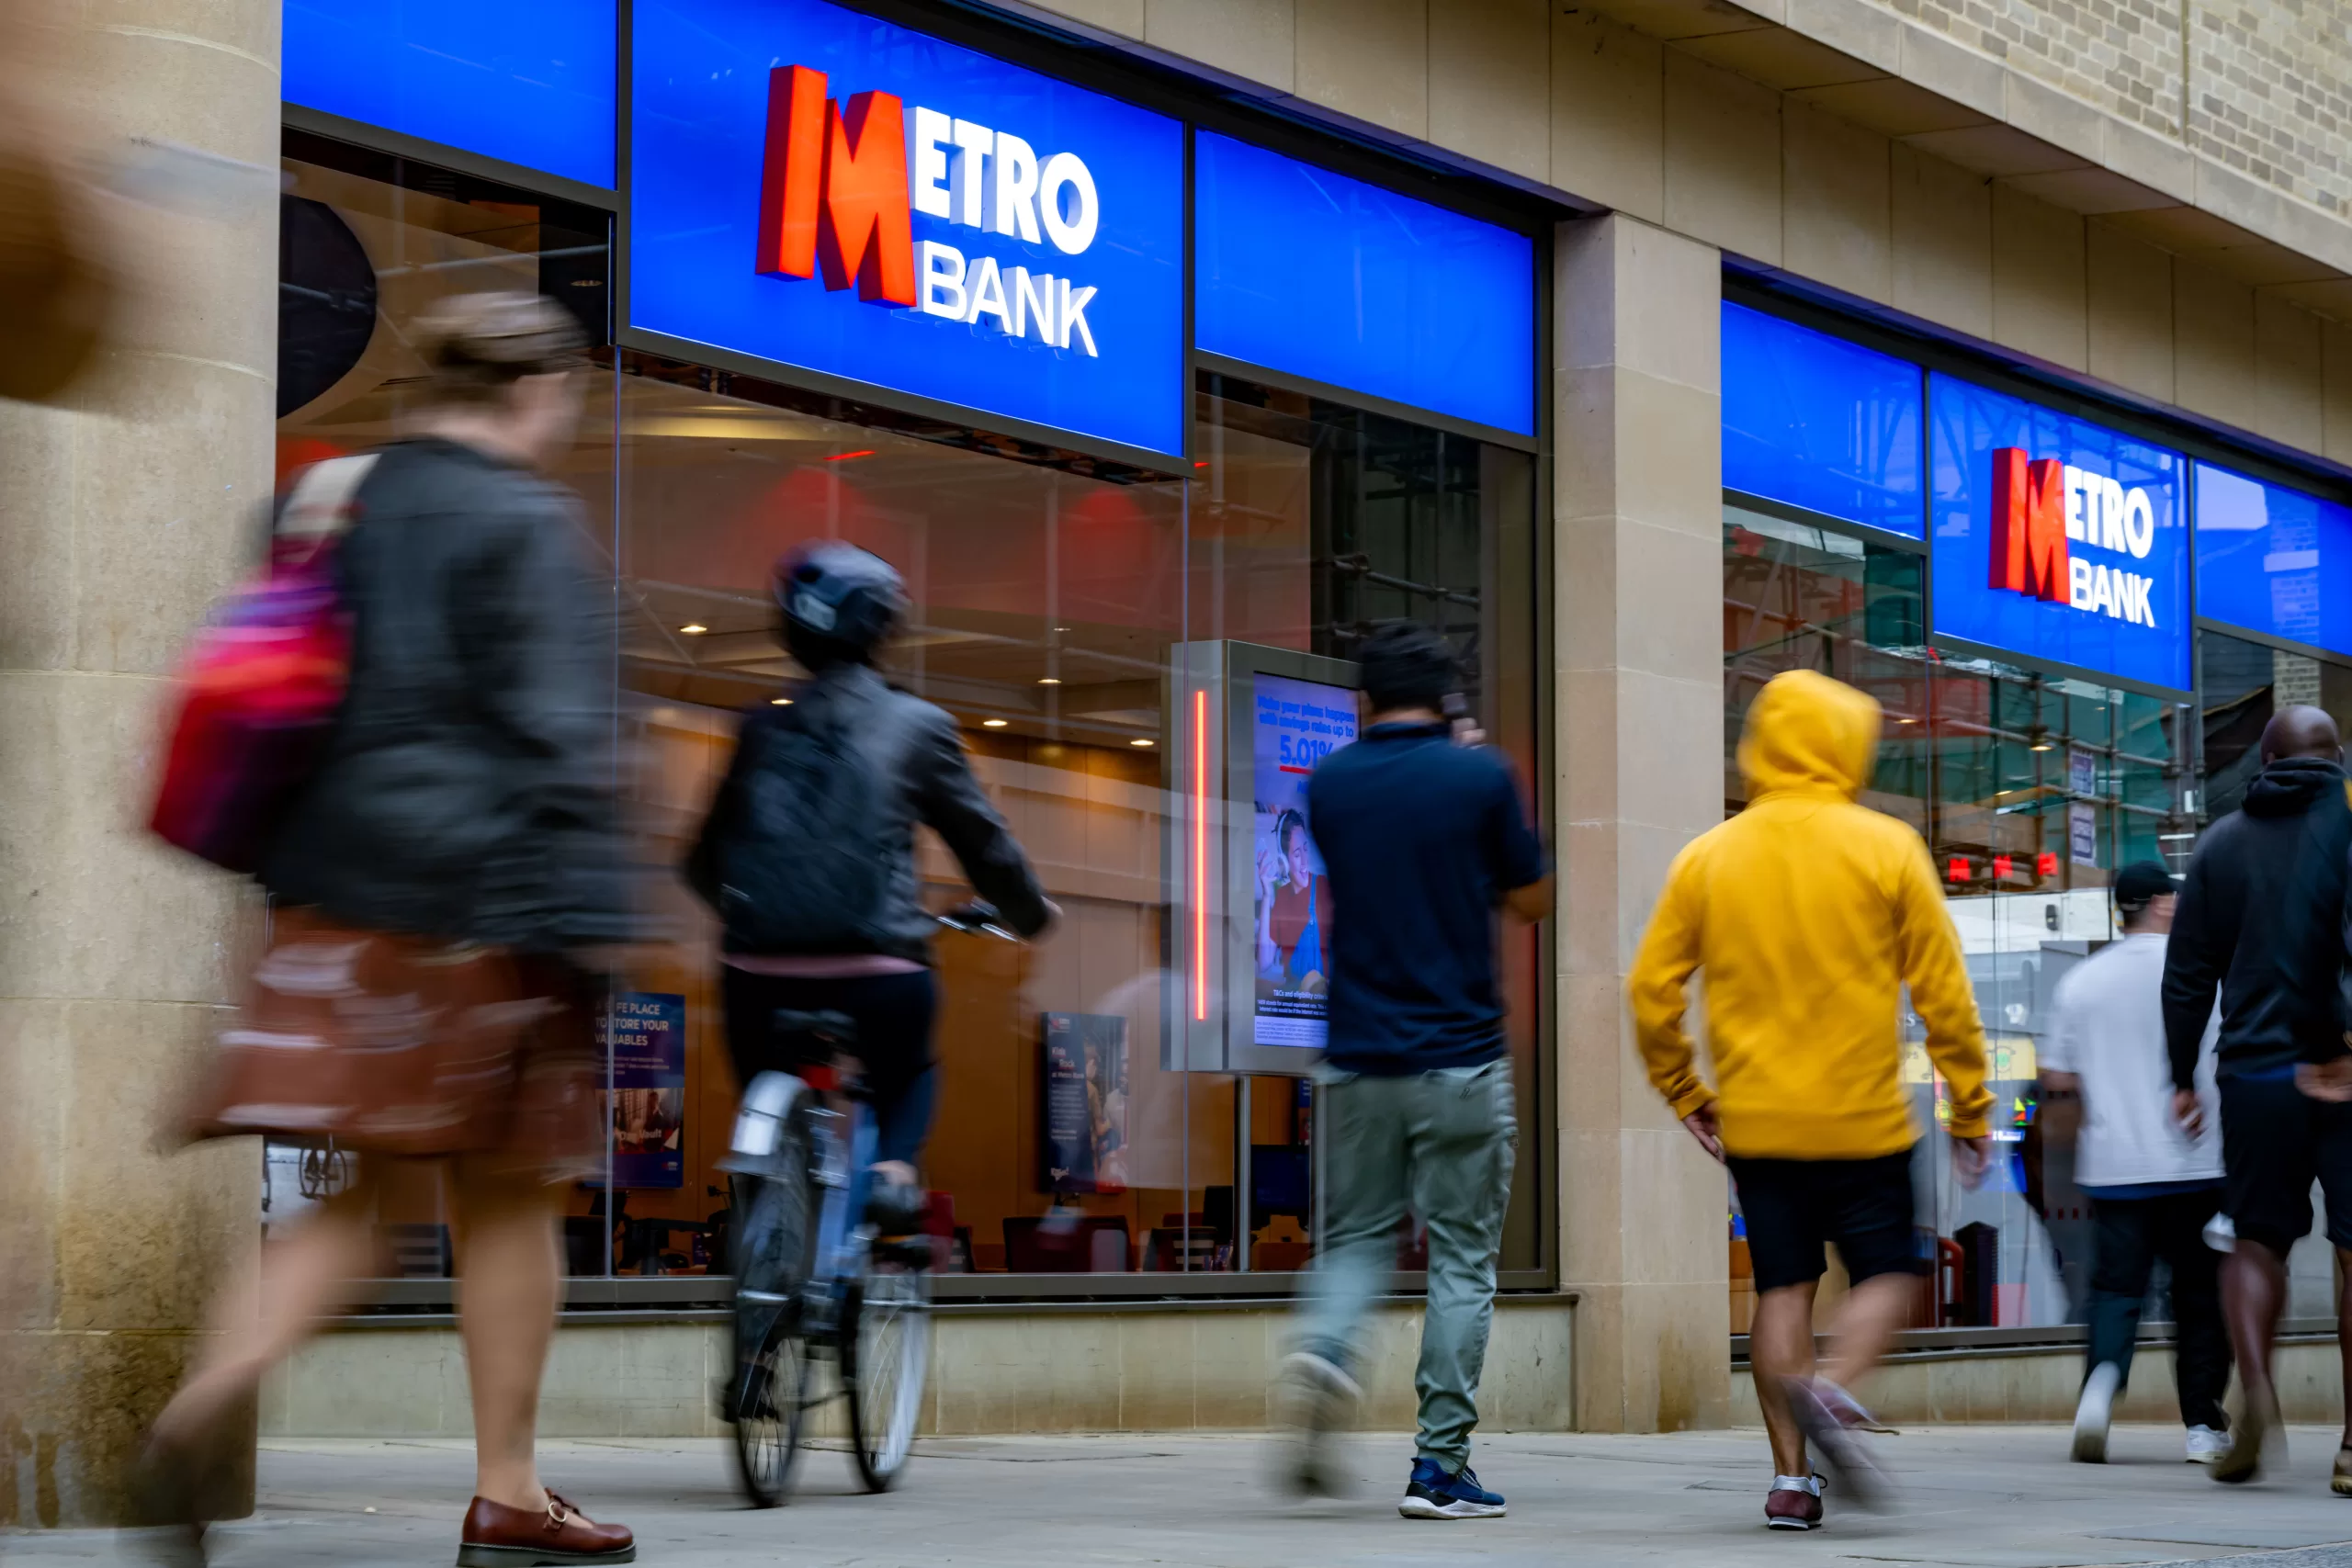 Metro Bank looks to raise extra capital